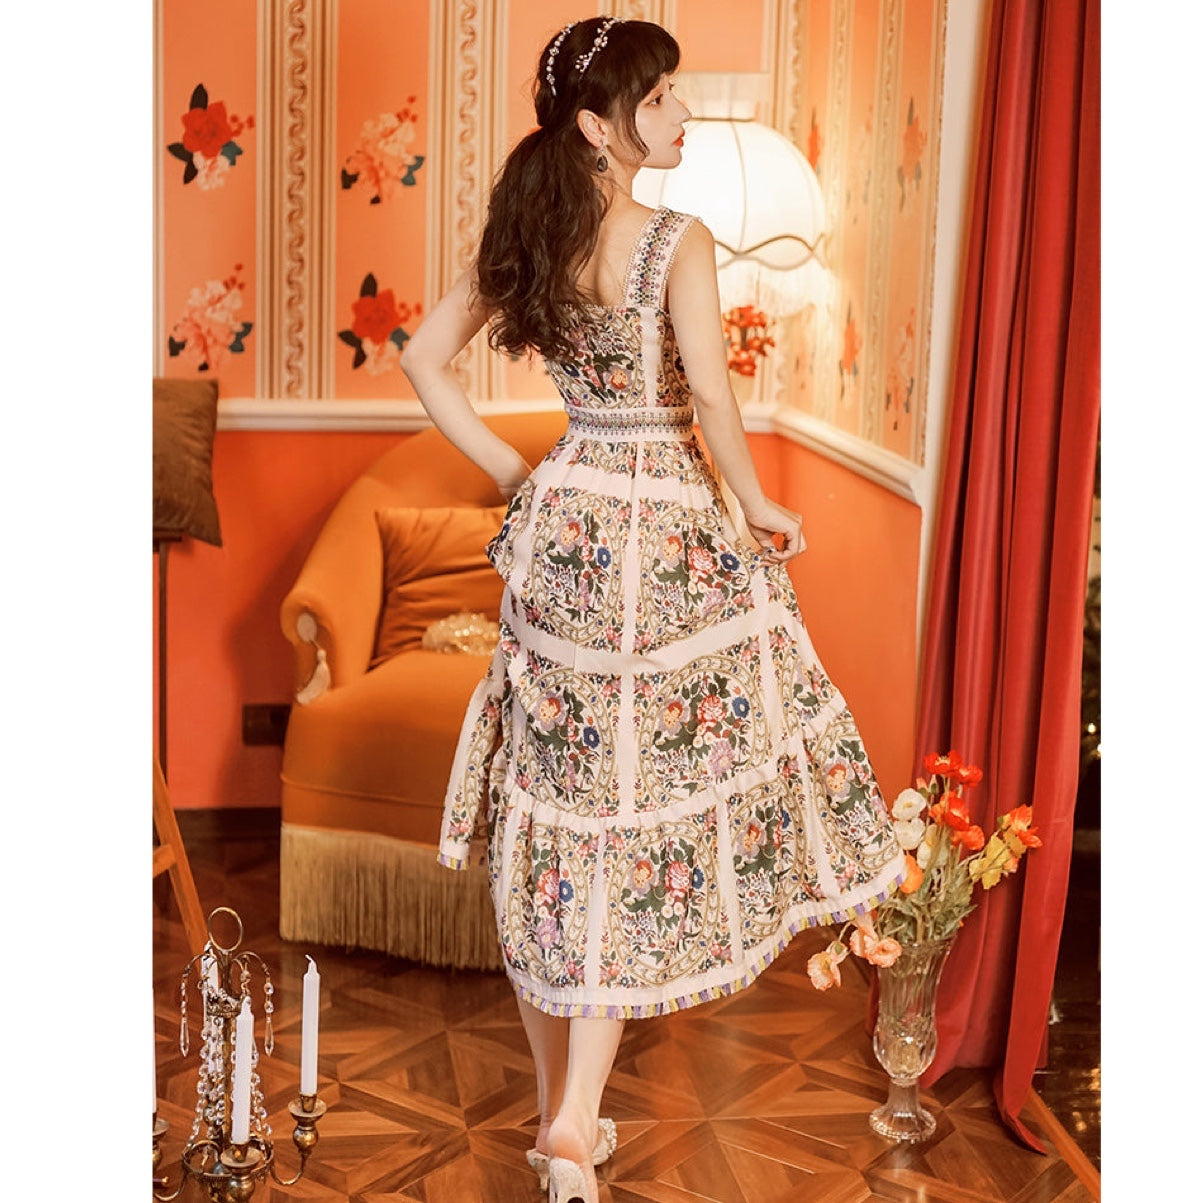 Colette French-Chateau Style Romantic Cottagecore Dress 